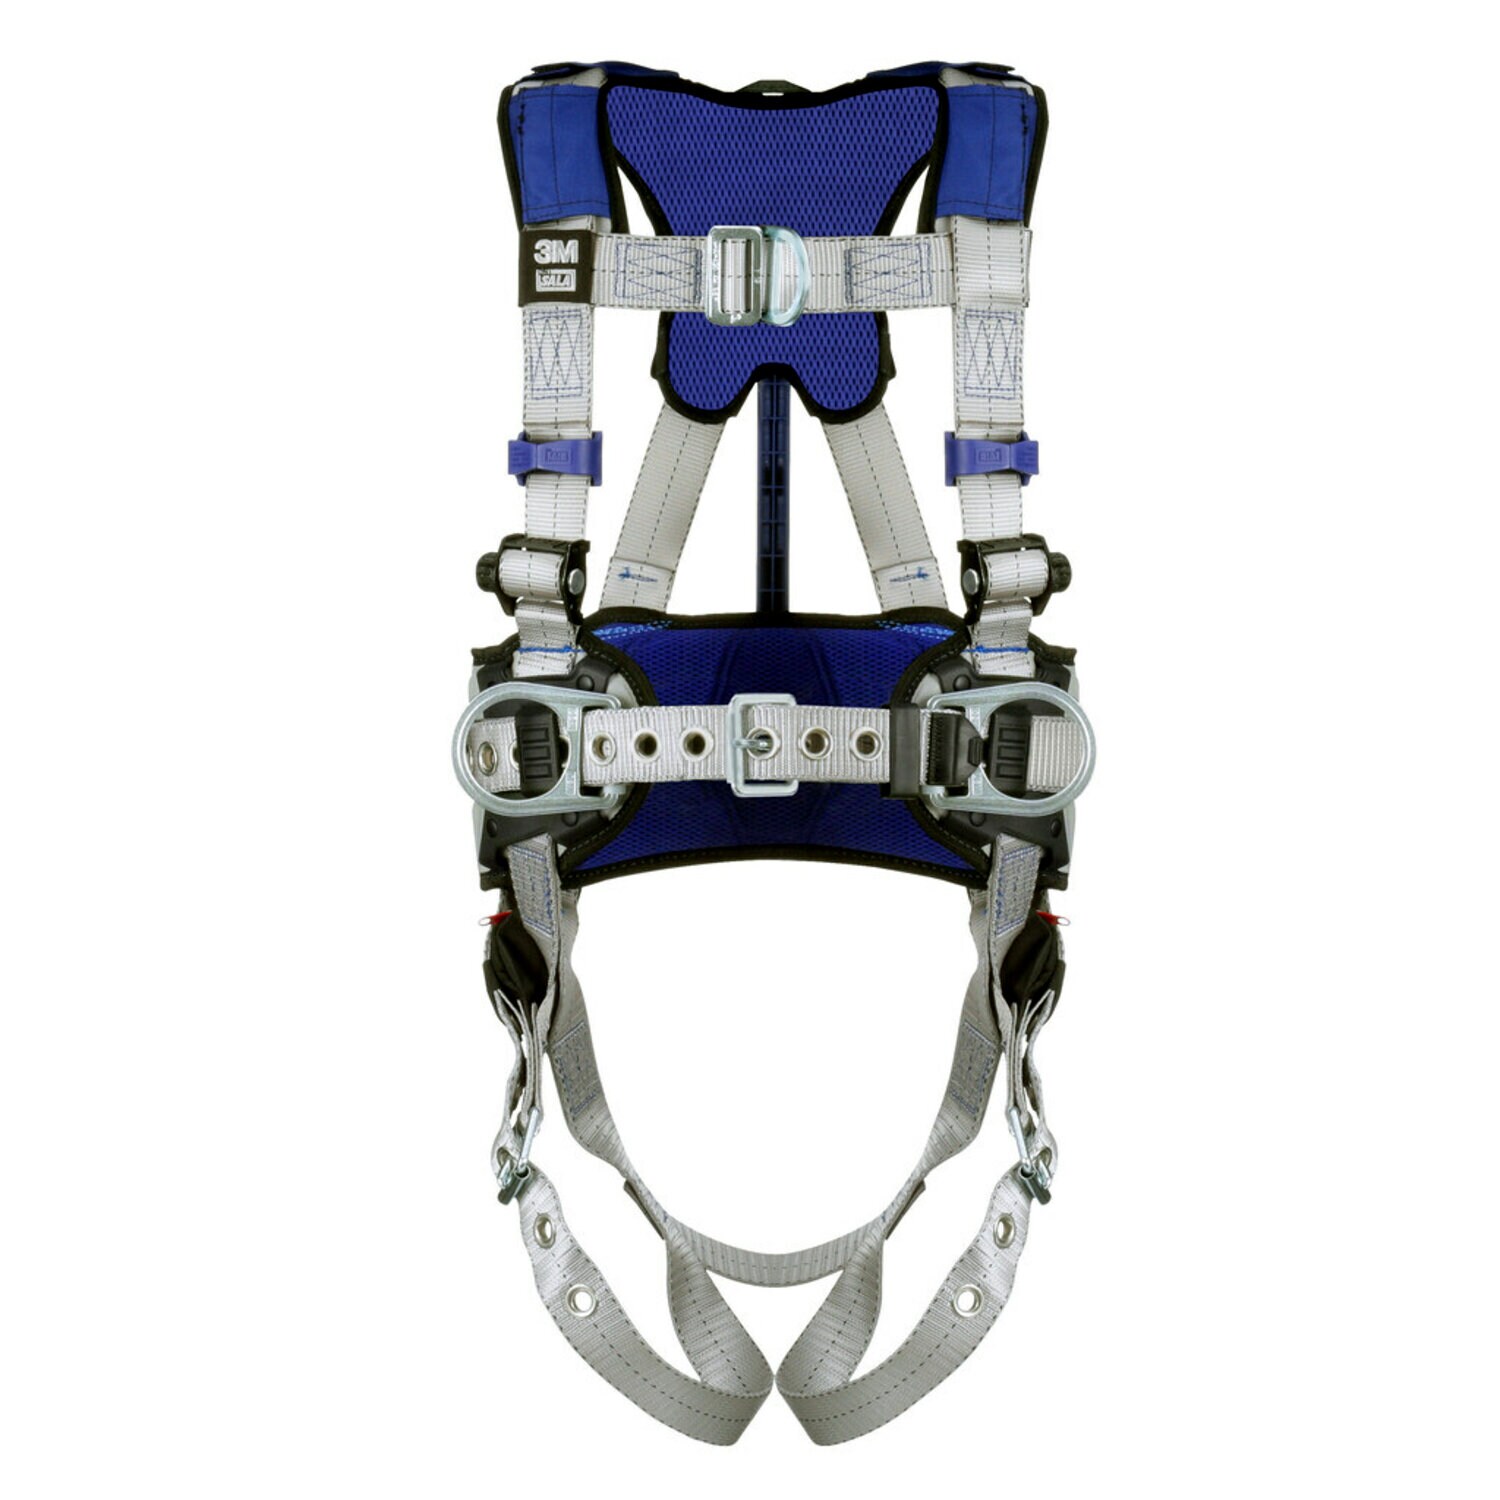 7012817518 - 3M DBI-SALA ExoFit X100 Comfort Construction Climbing/Positioning Safety Harness 1401045, Small